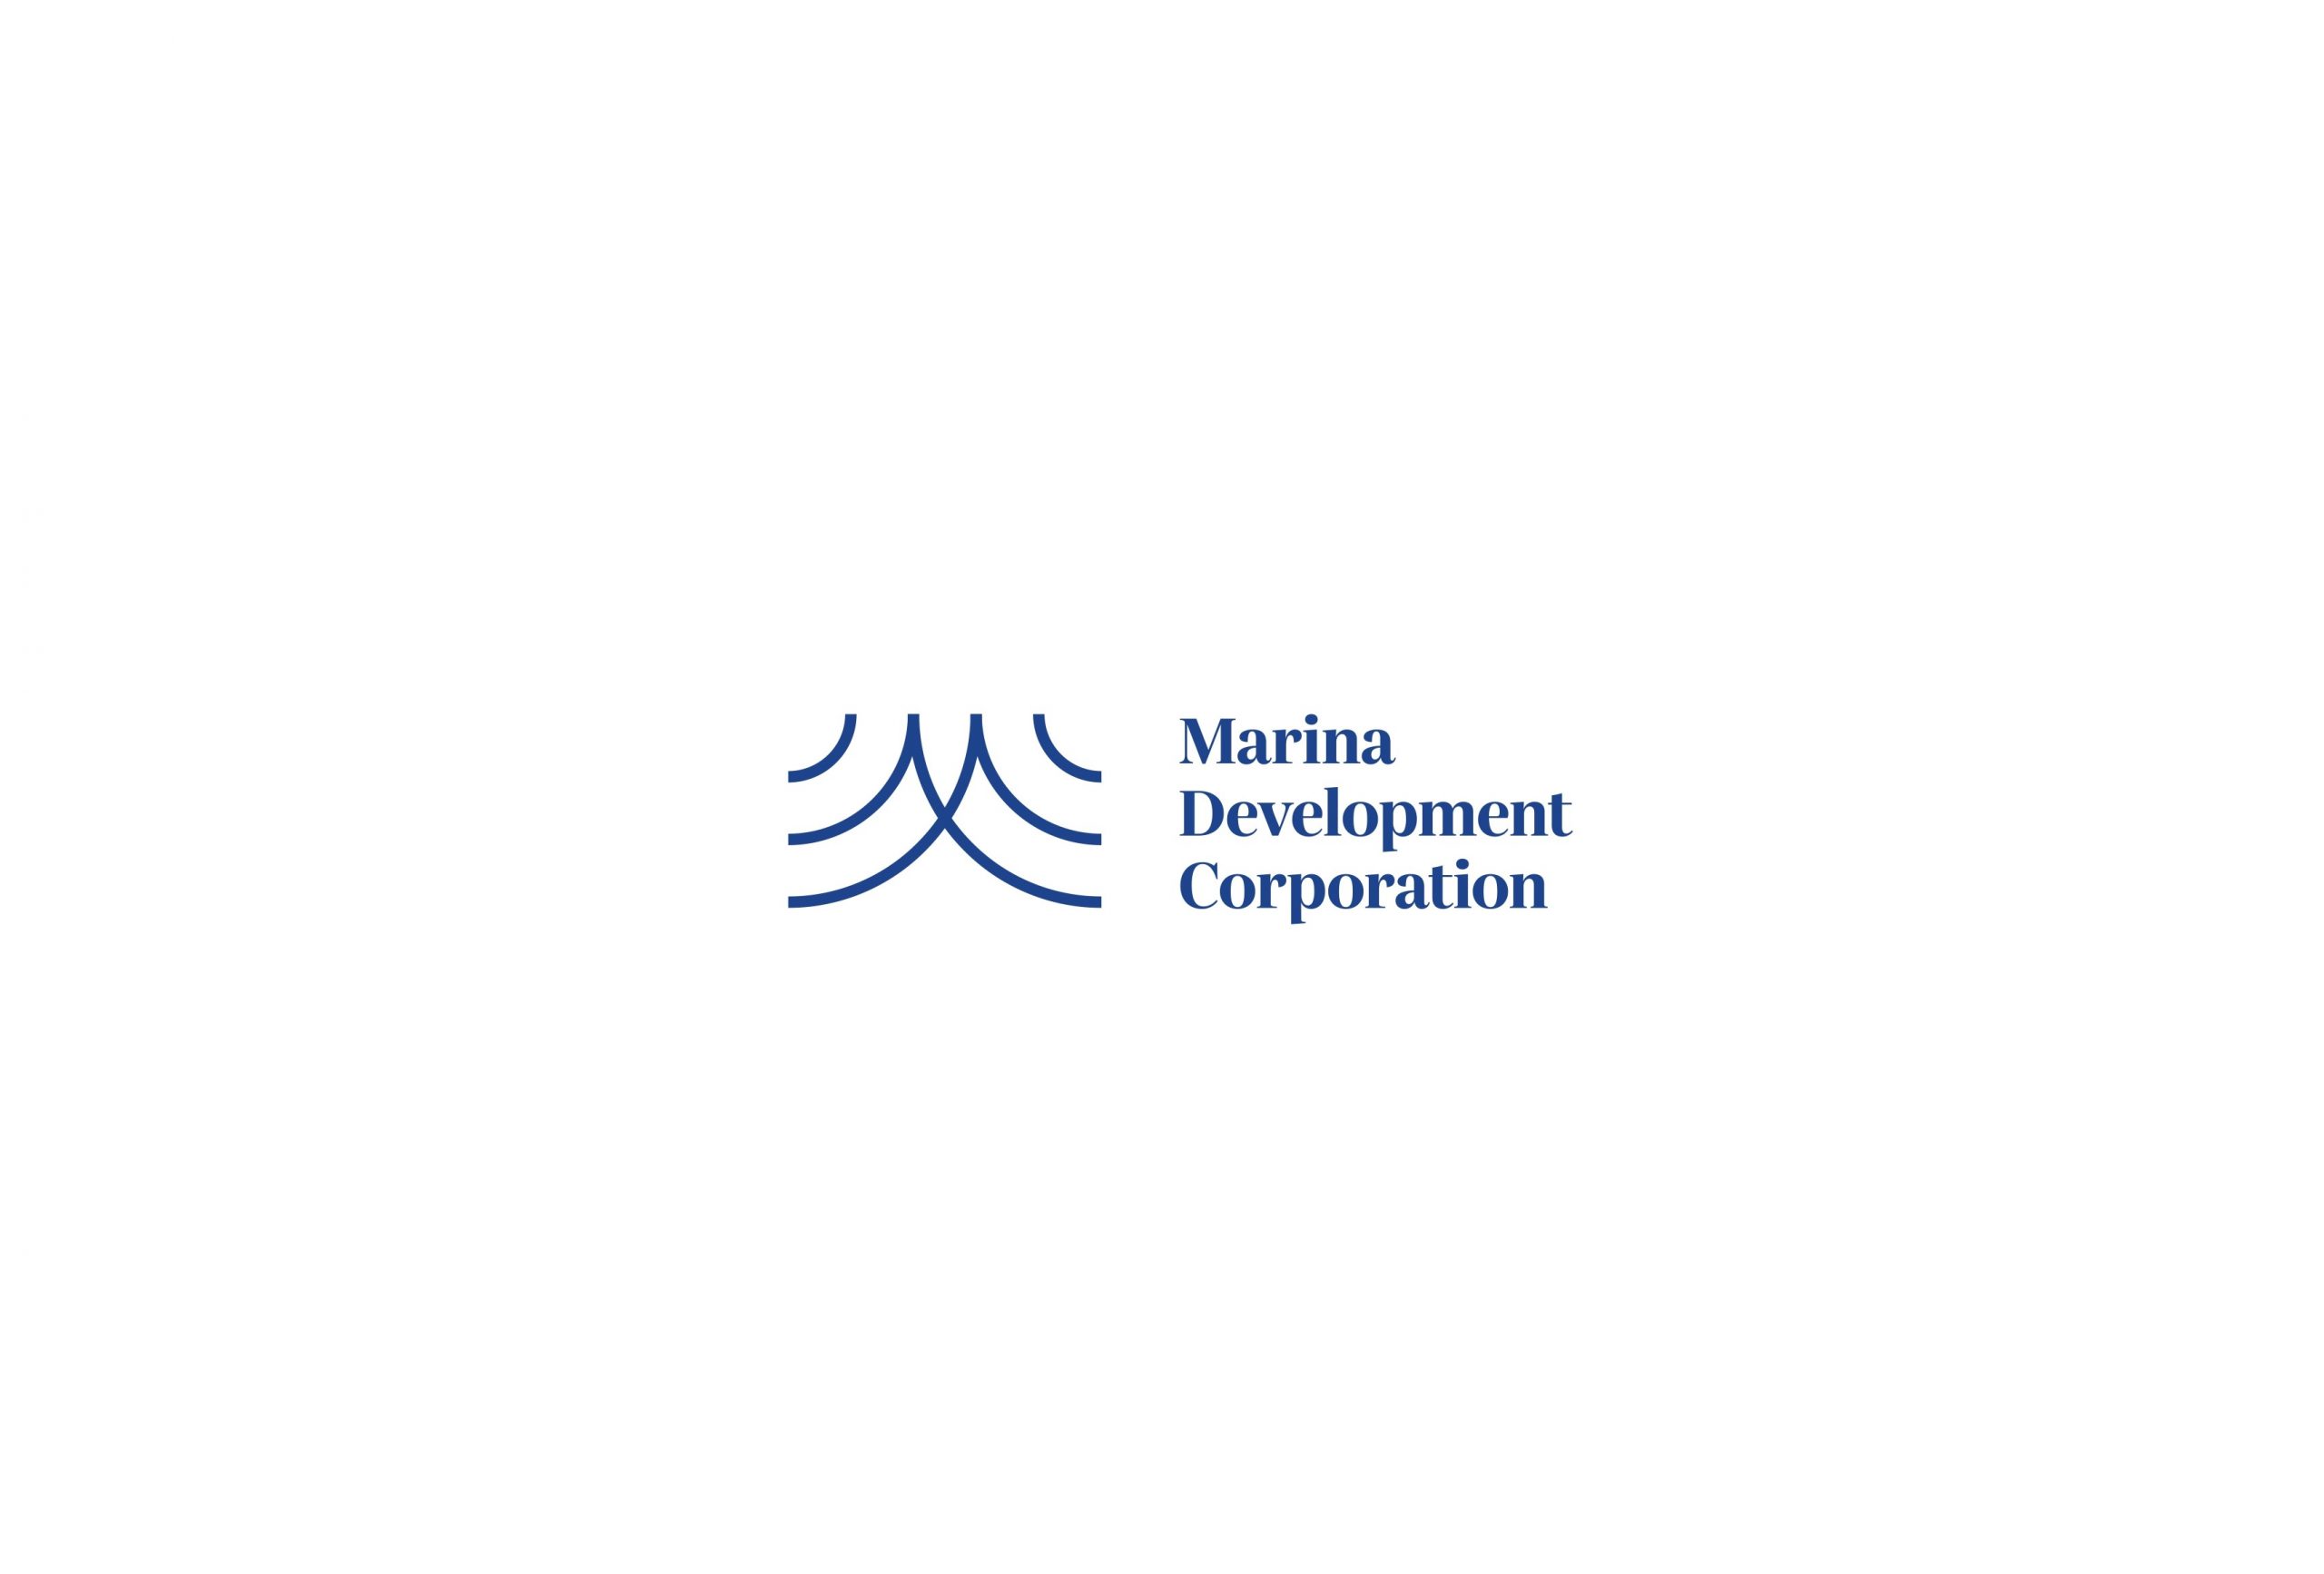 MDC Marina Development Corporation